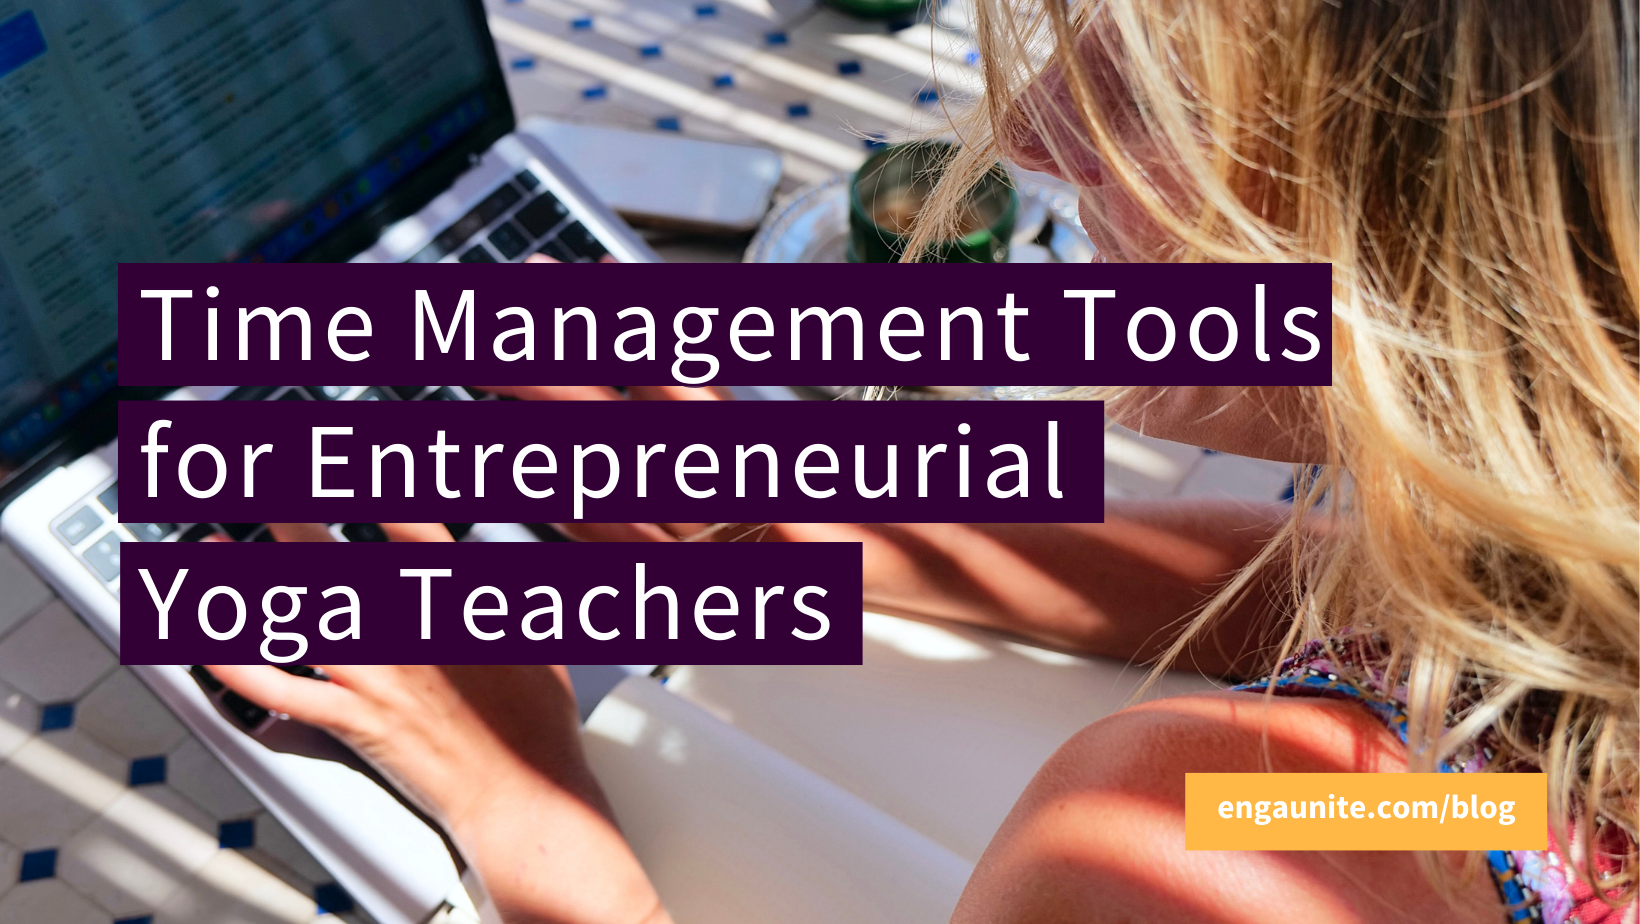 Time Management Tools for Entrepreneurial Yoga Teachers